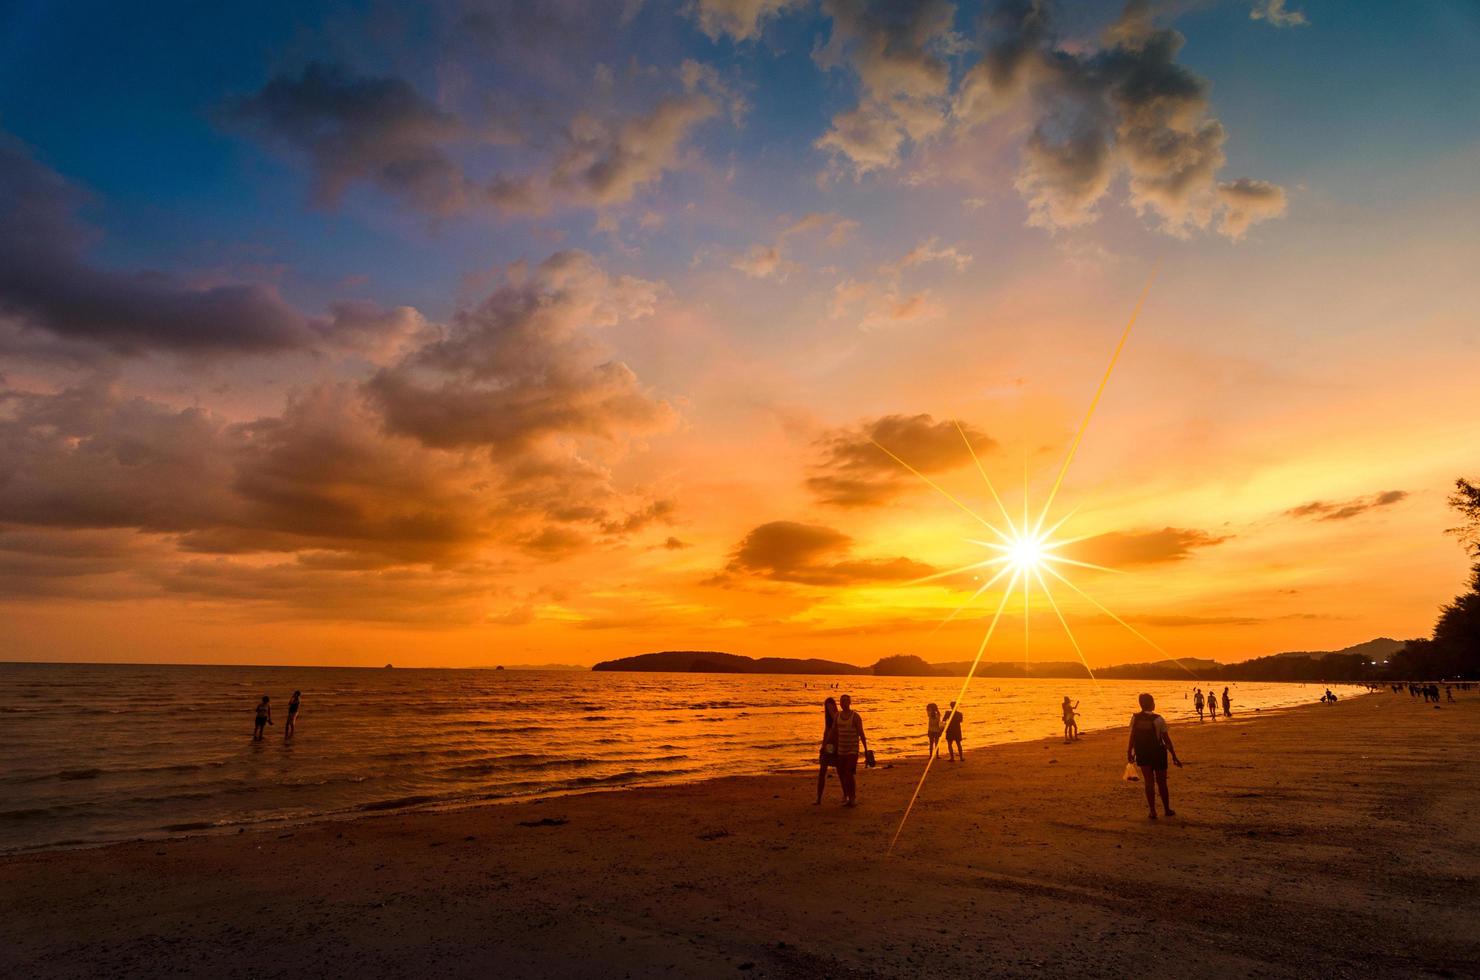 ao nang krabi, tailandia, 2020 - gente en la playa al atardecer foto